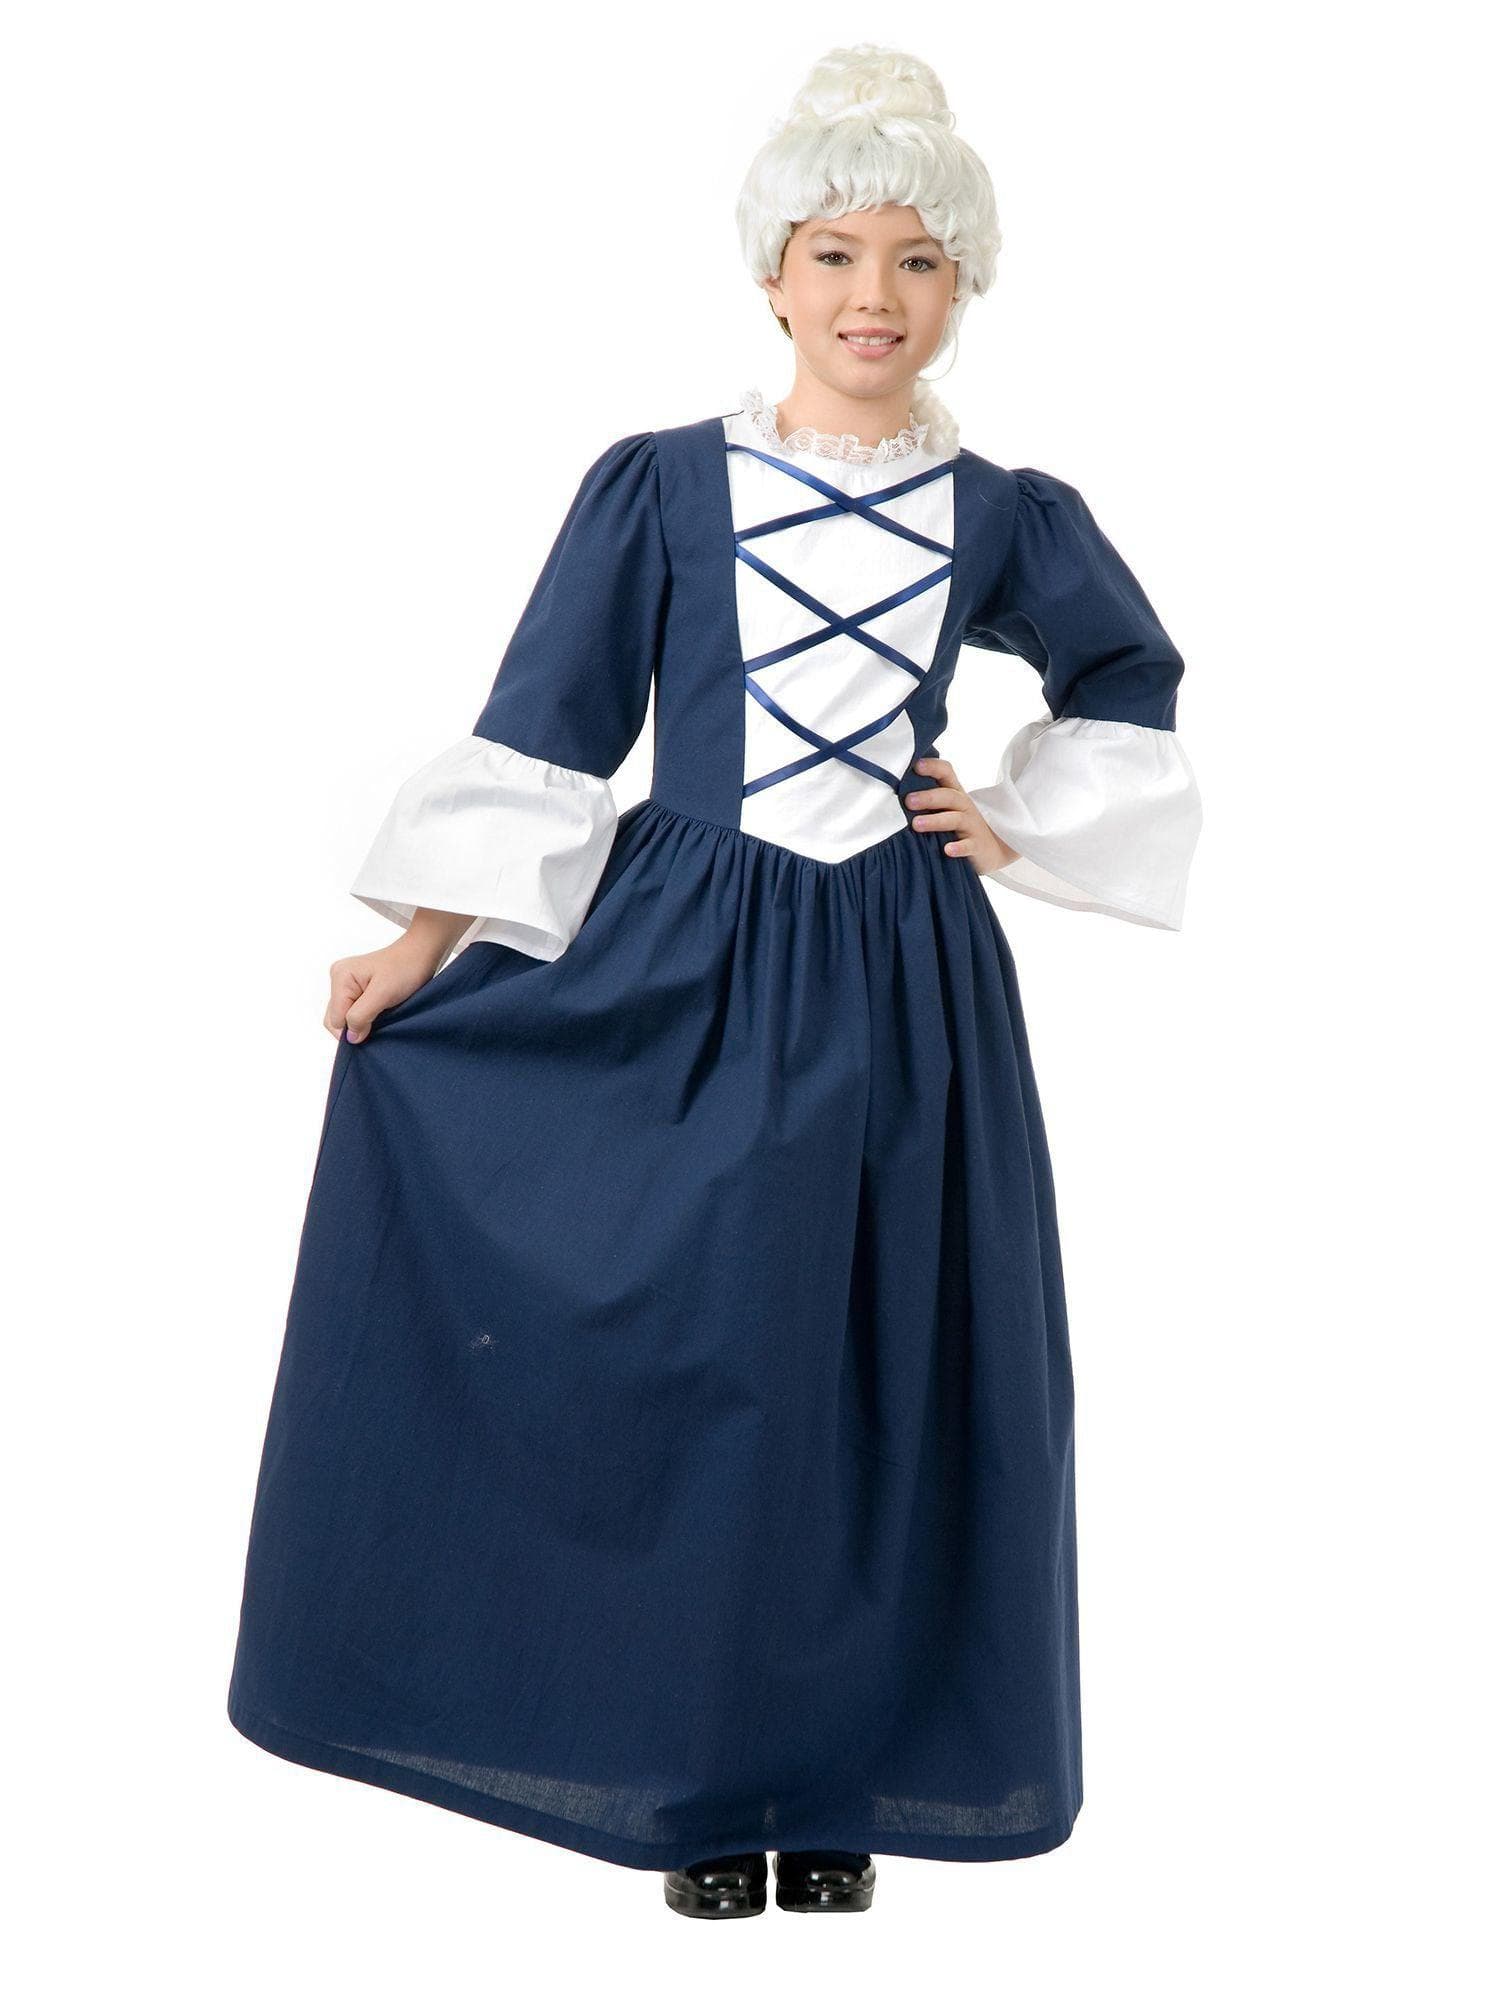 Kid's Martha Washington Costume - costumes.com